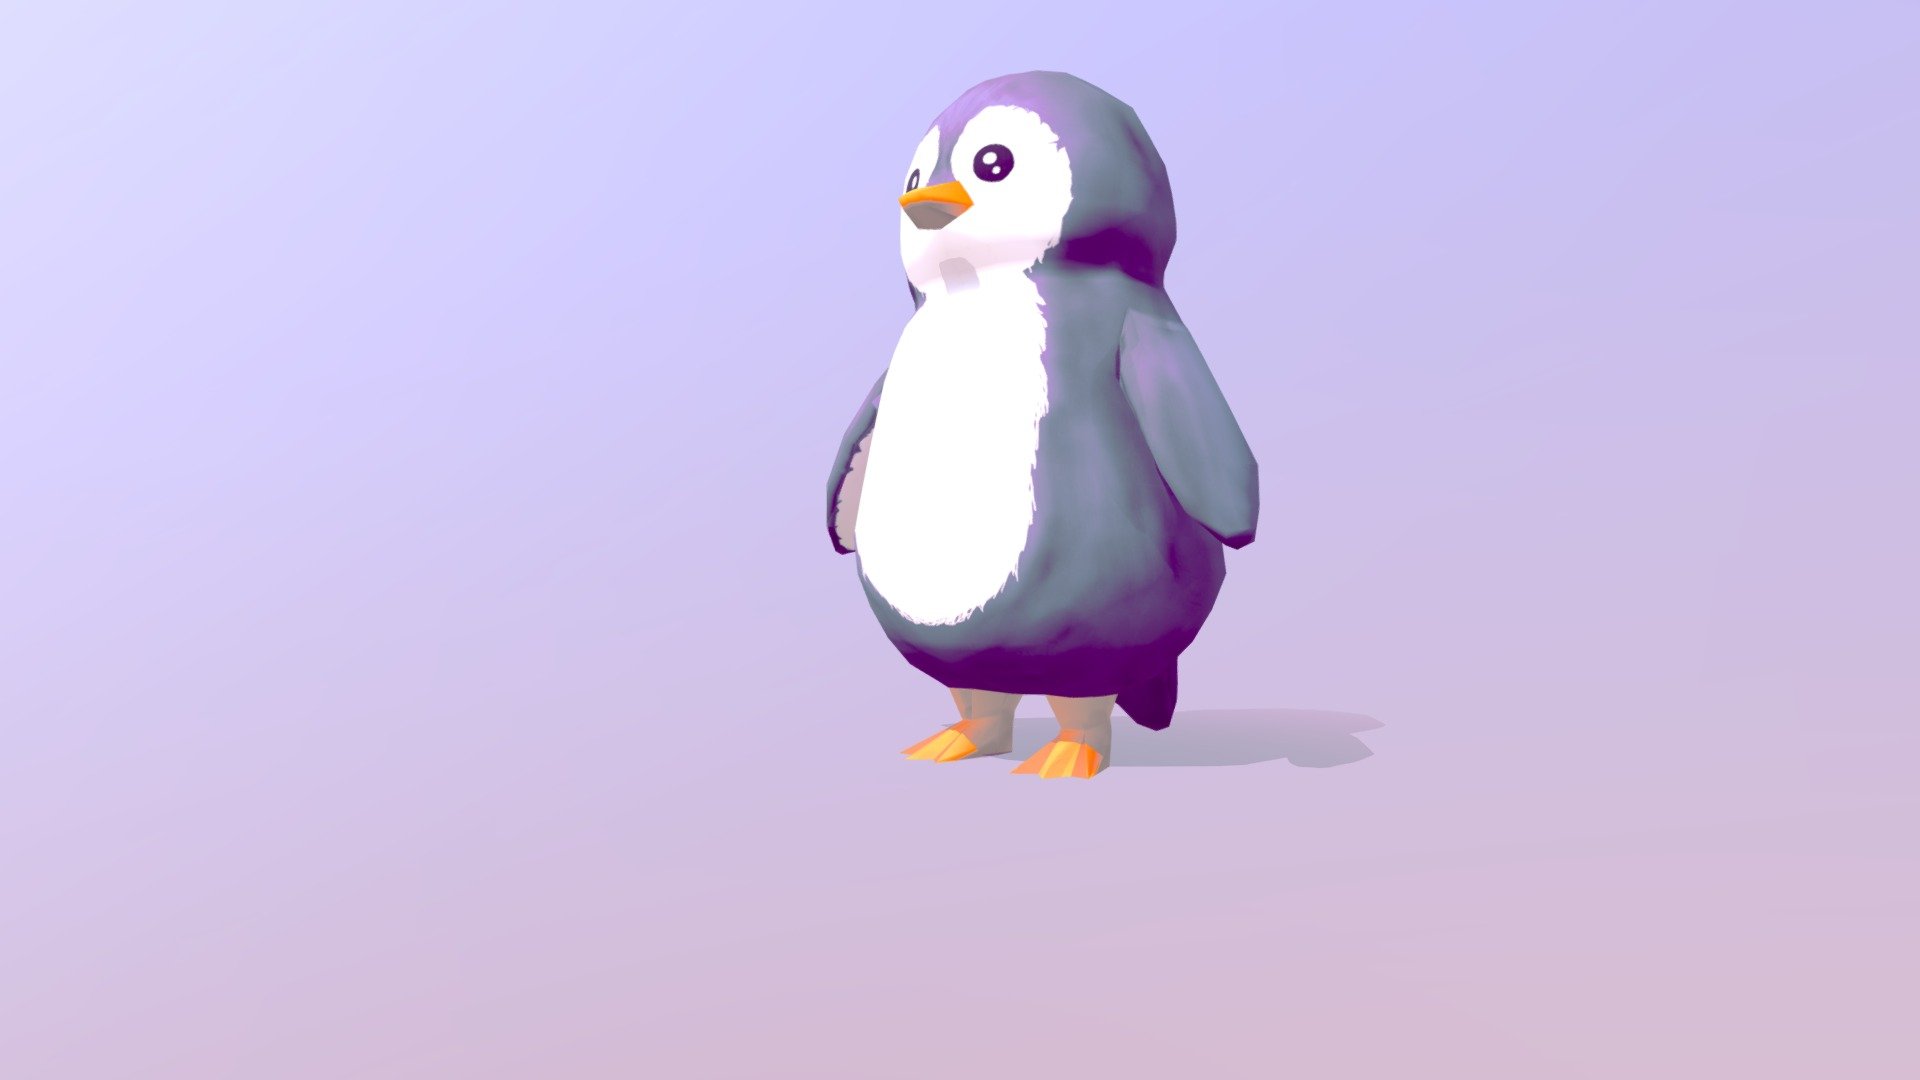 Penguin modeled in Blender with animation.

Files: Blender, Fbx and textureUV 3d model